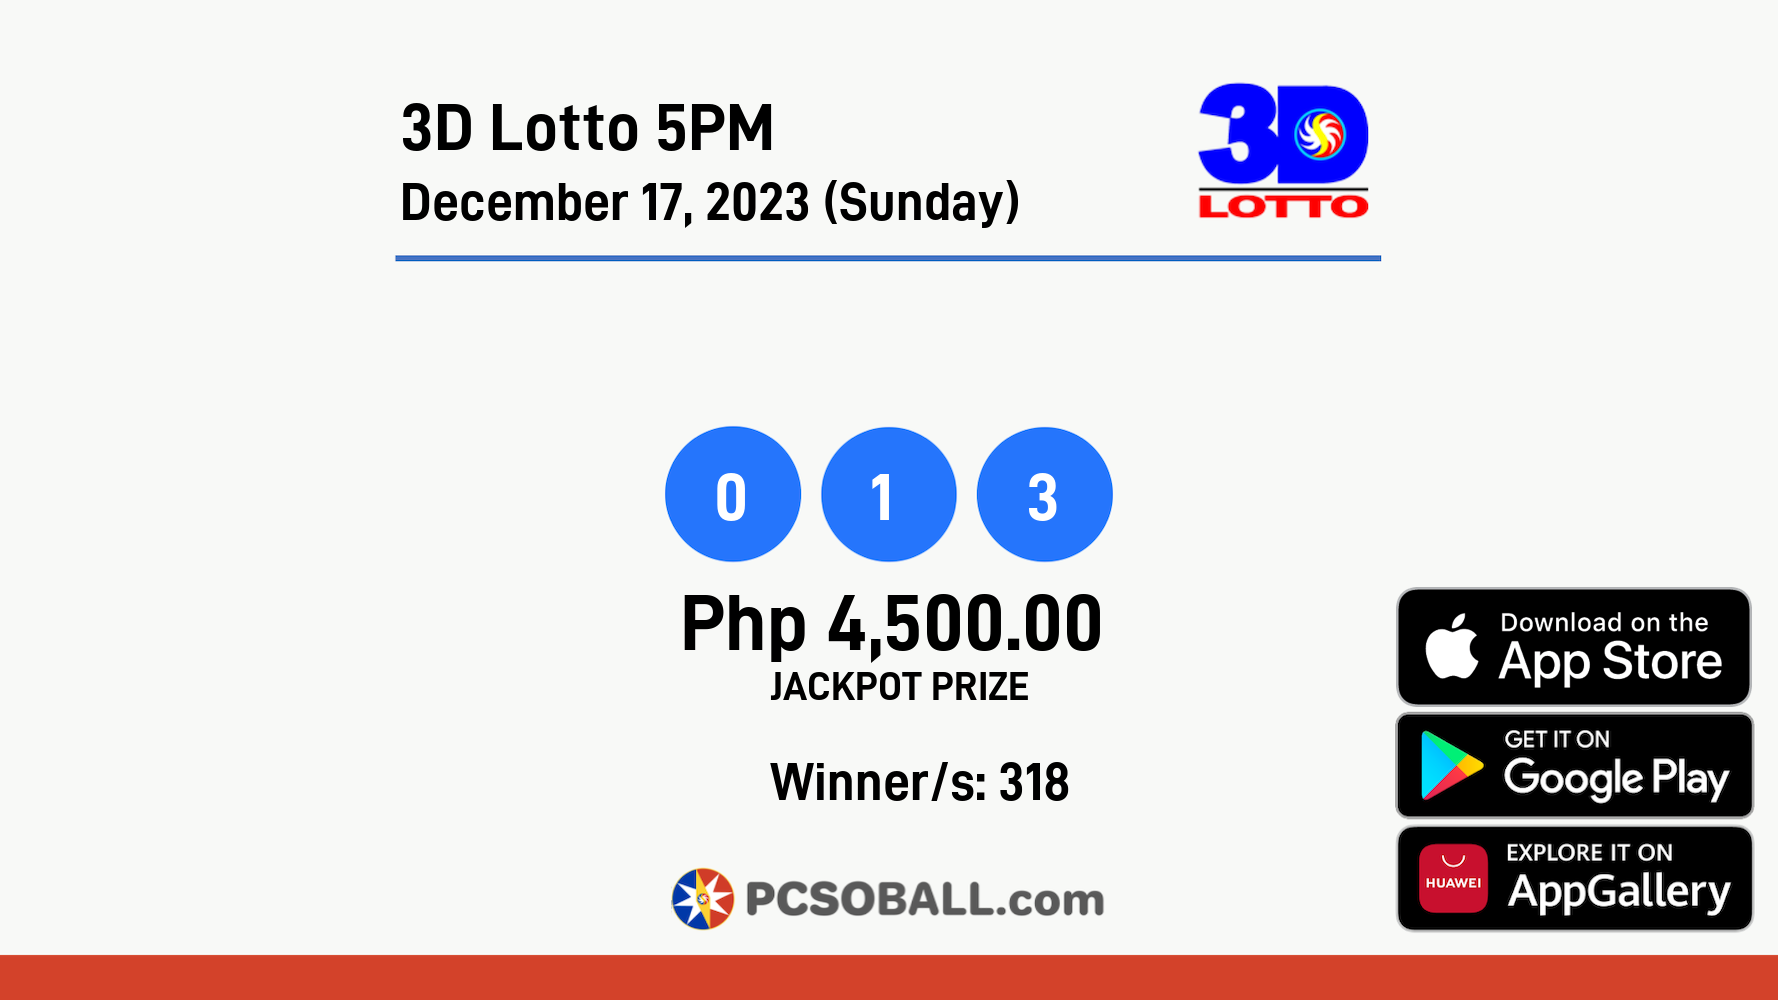 3D Lotto 5PM December 17, 2023 (Sunday) Result